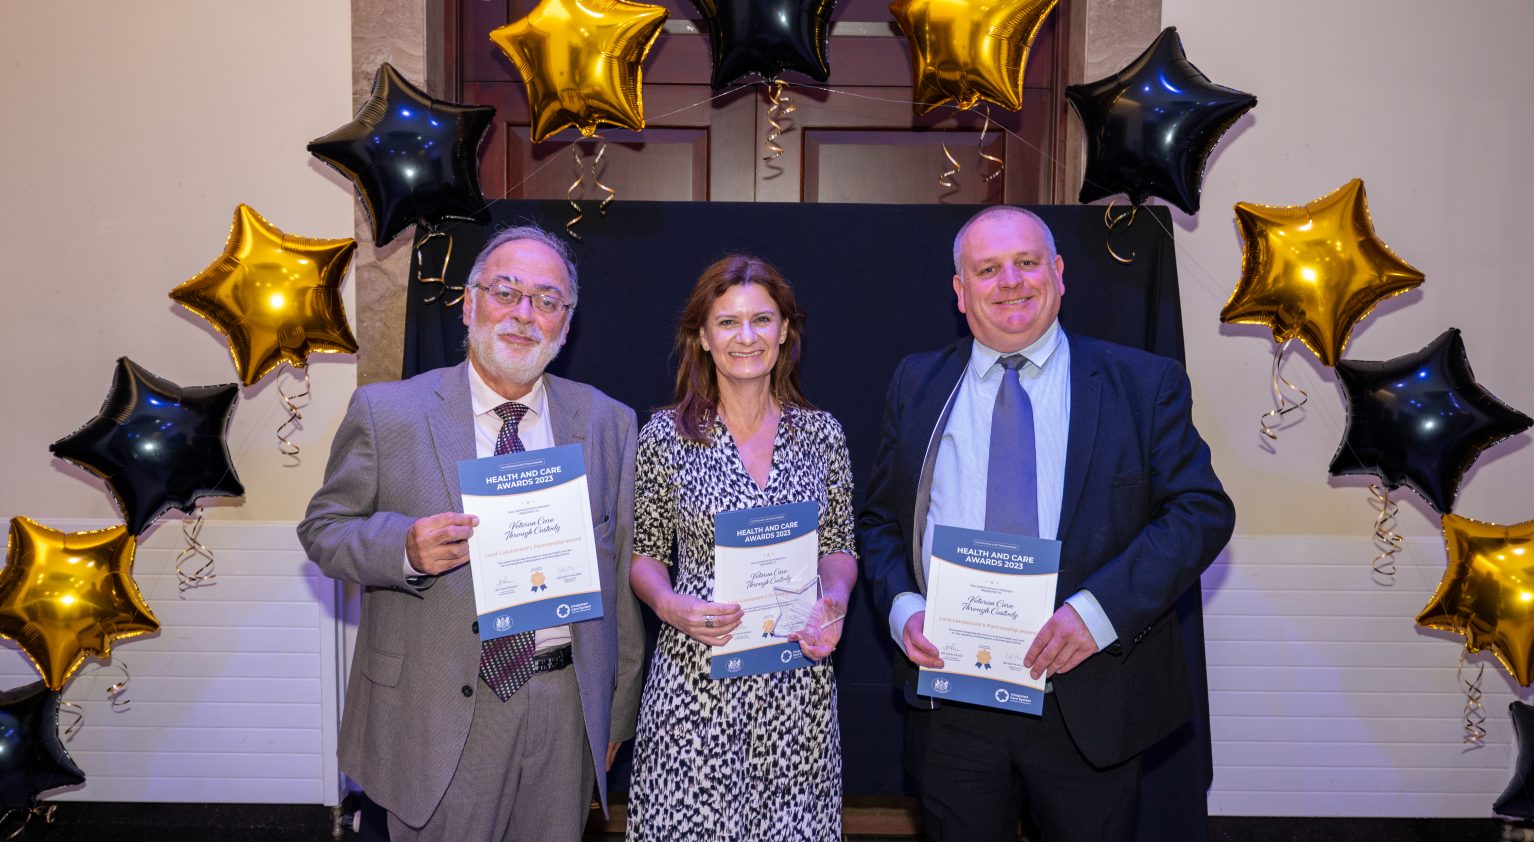 The overall award winners - Veteran Care Through Custod